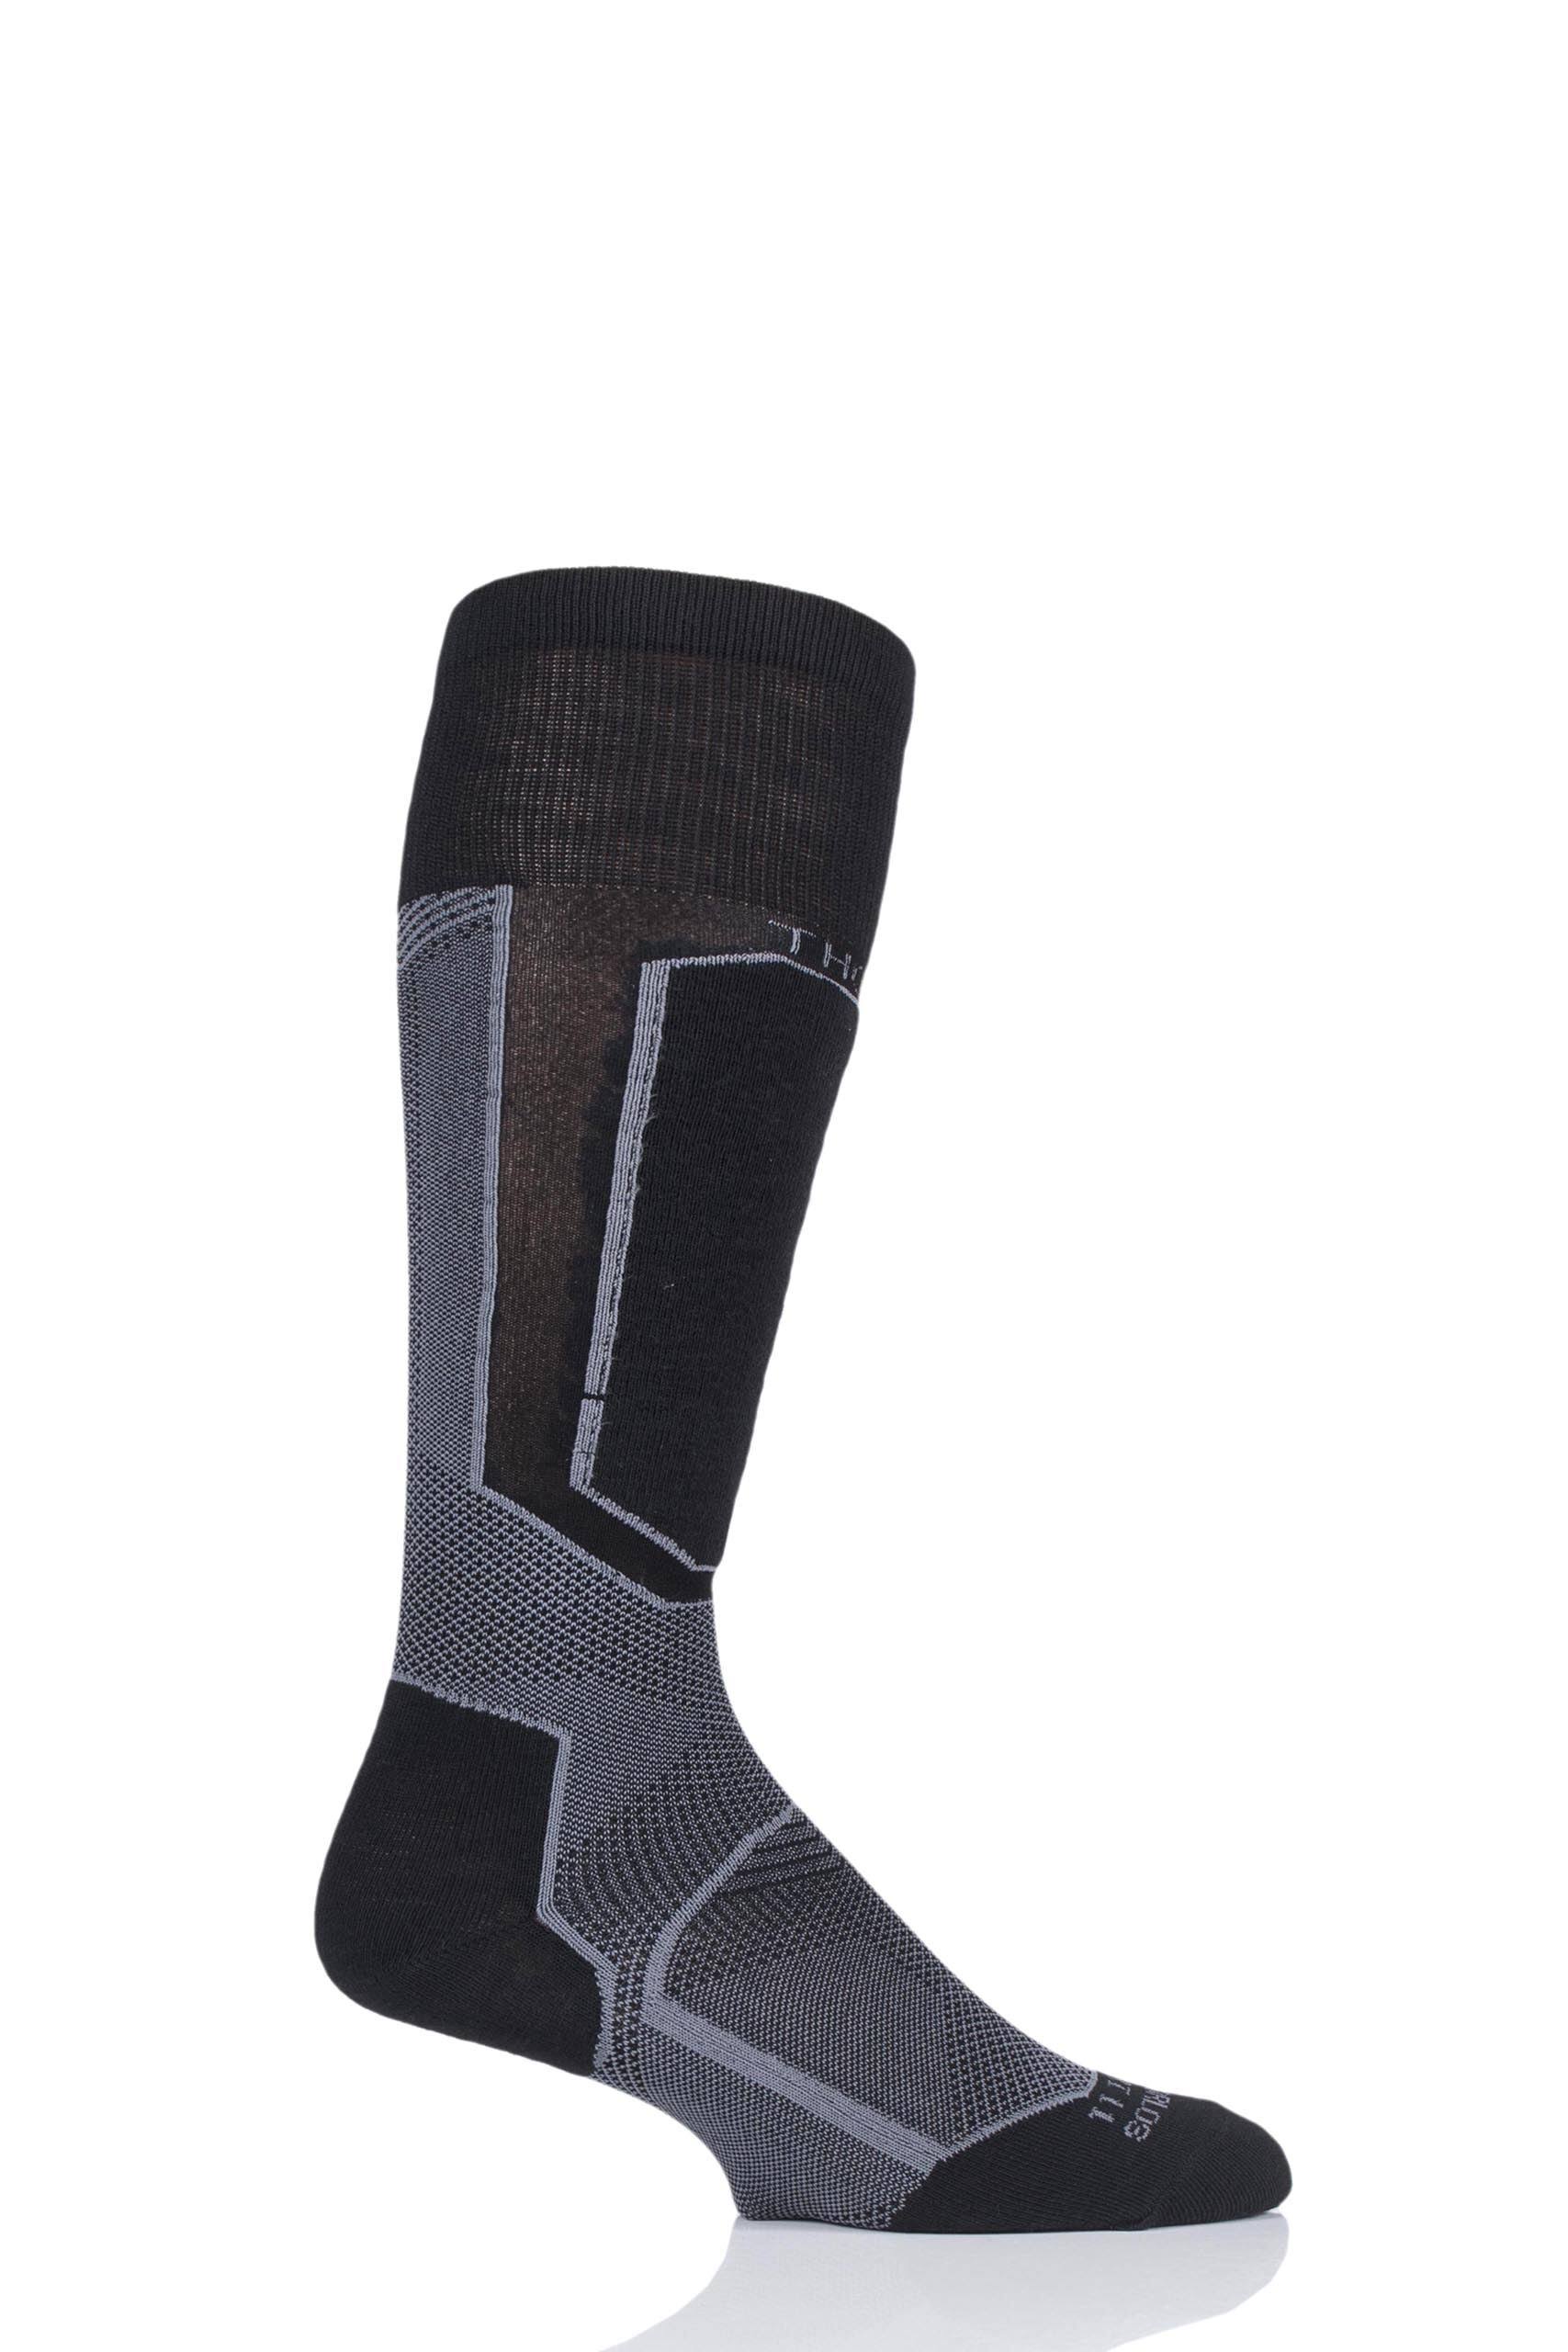 Thorlos Ultra-thin Liner Ski Socks, Large, Powder White